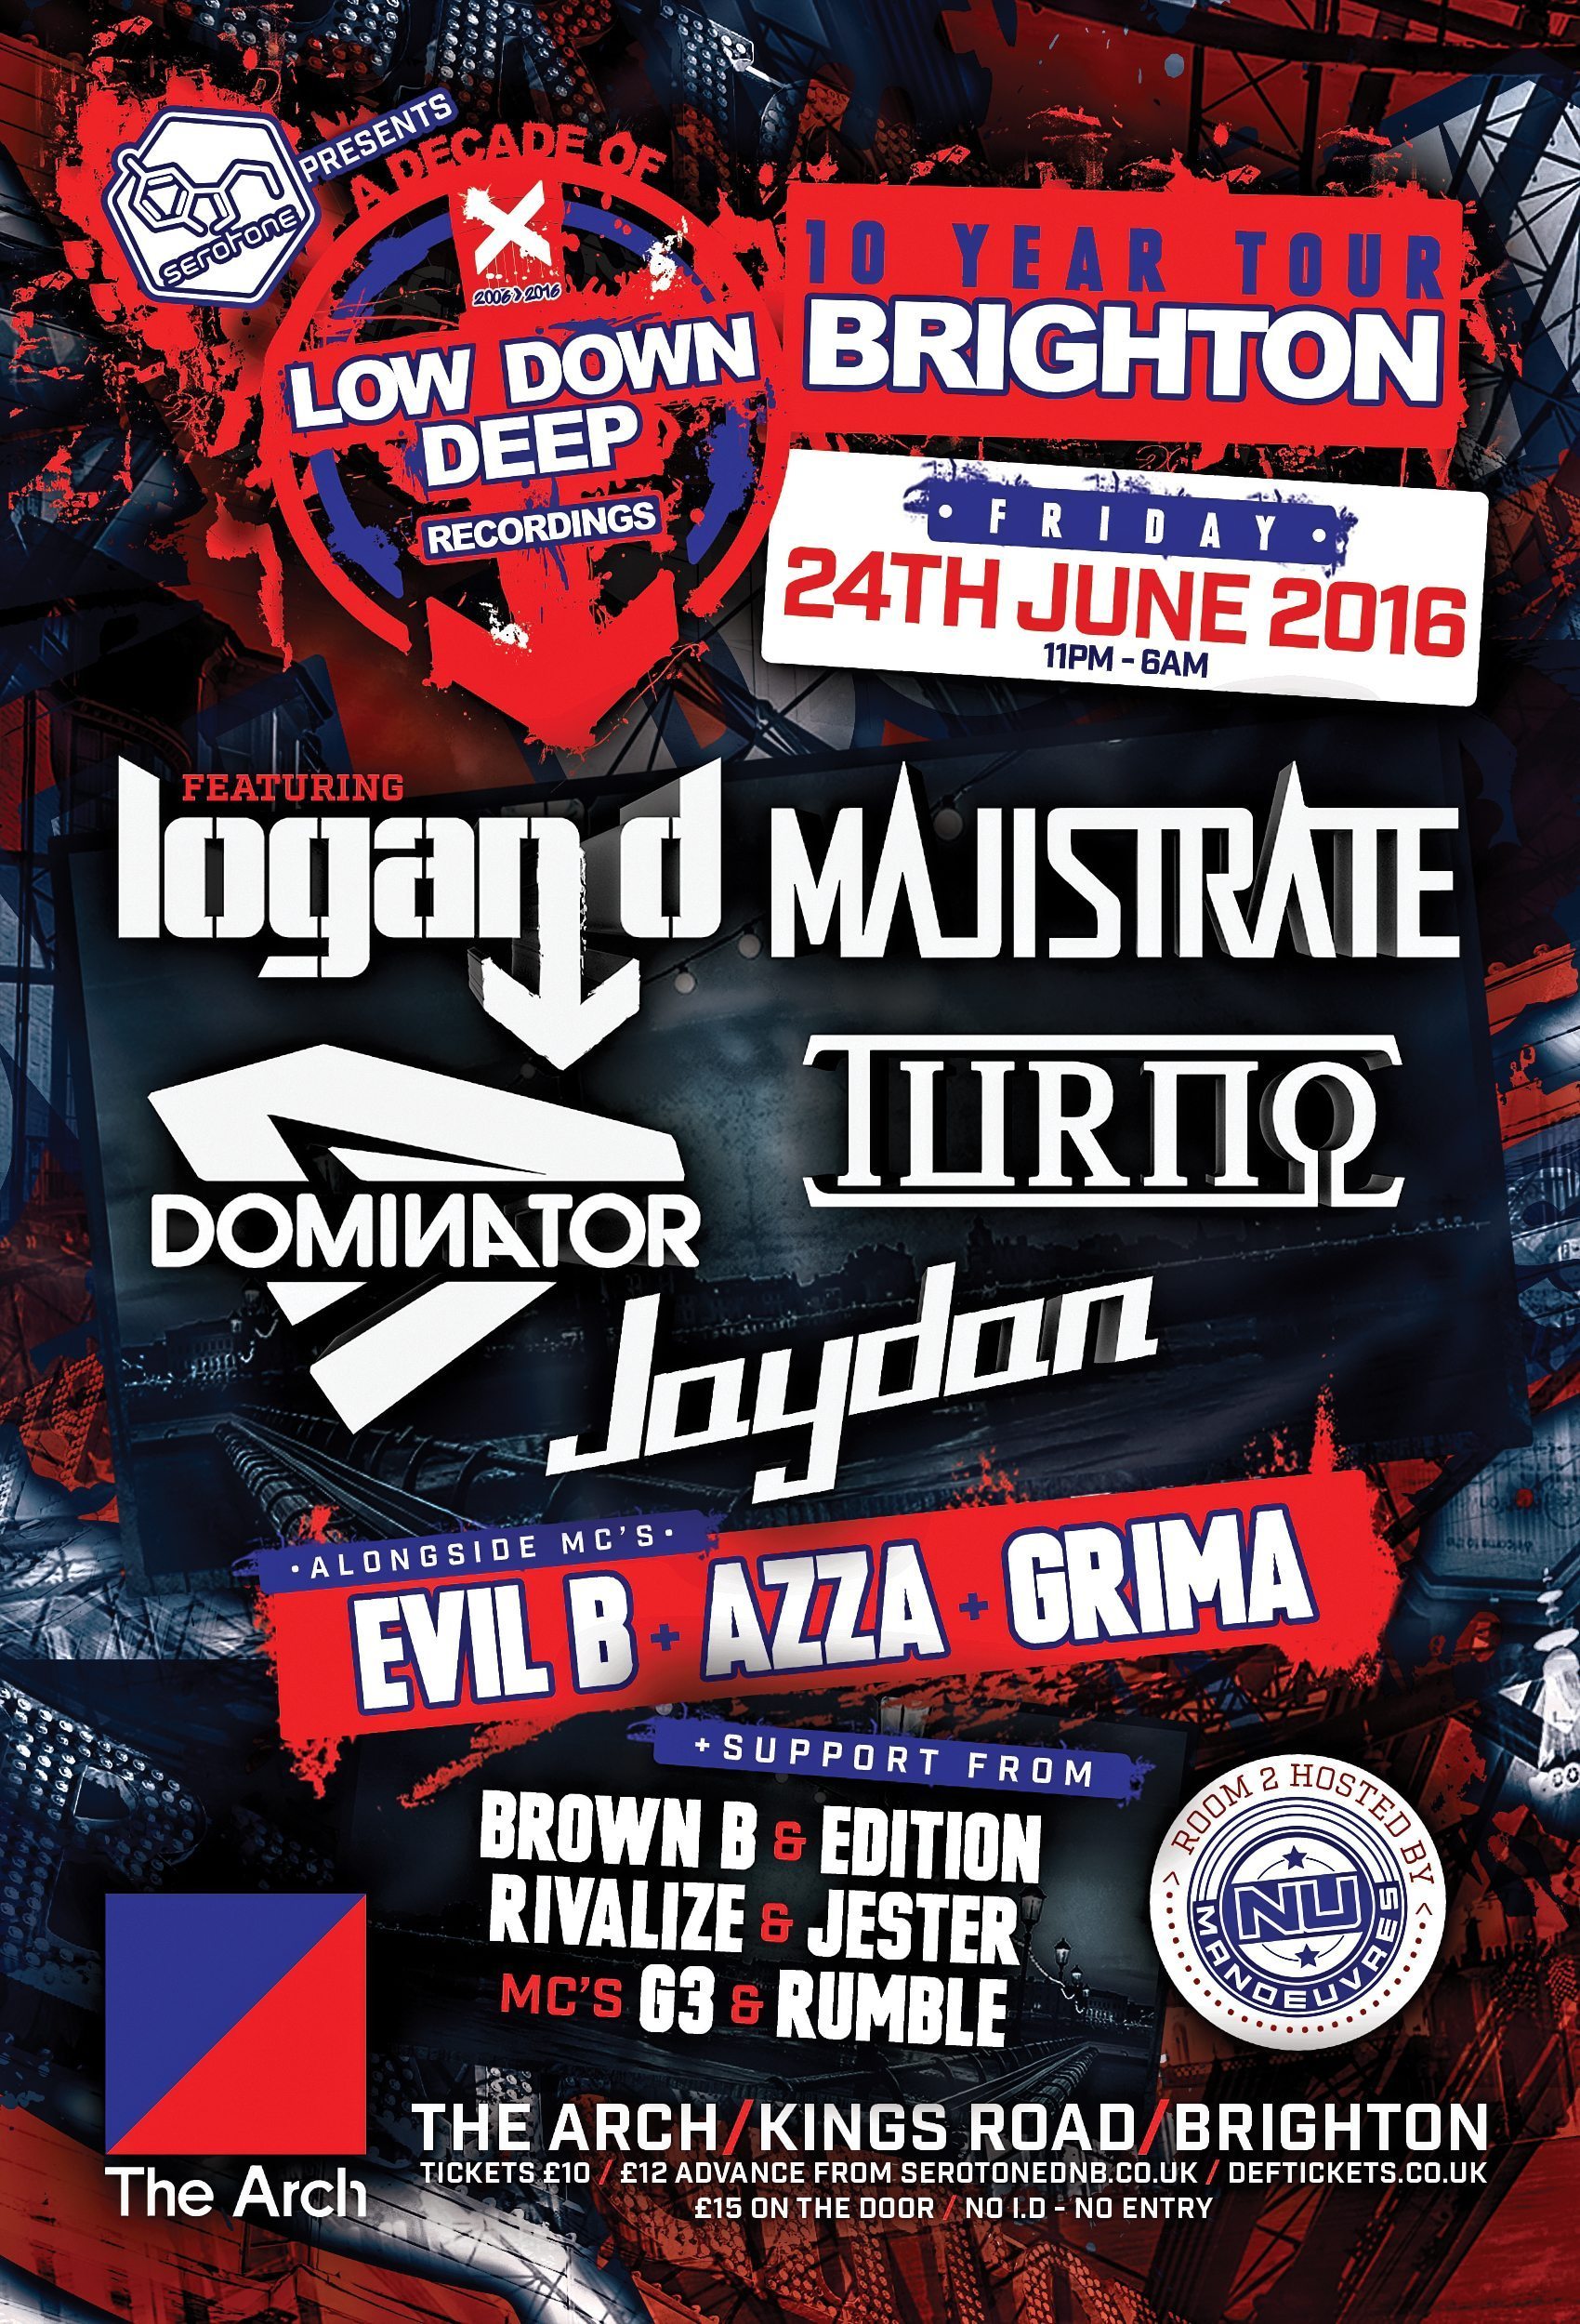 Low Down Deep 10 Year Tour – Brighton